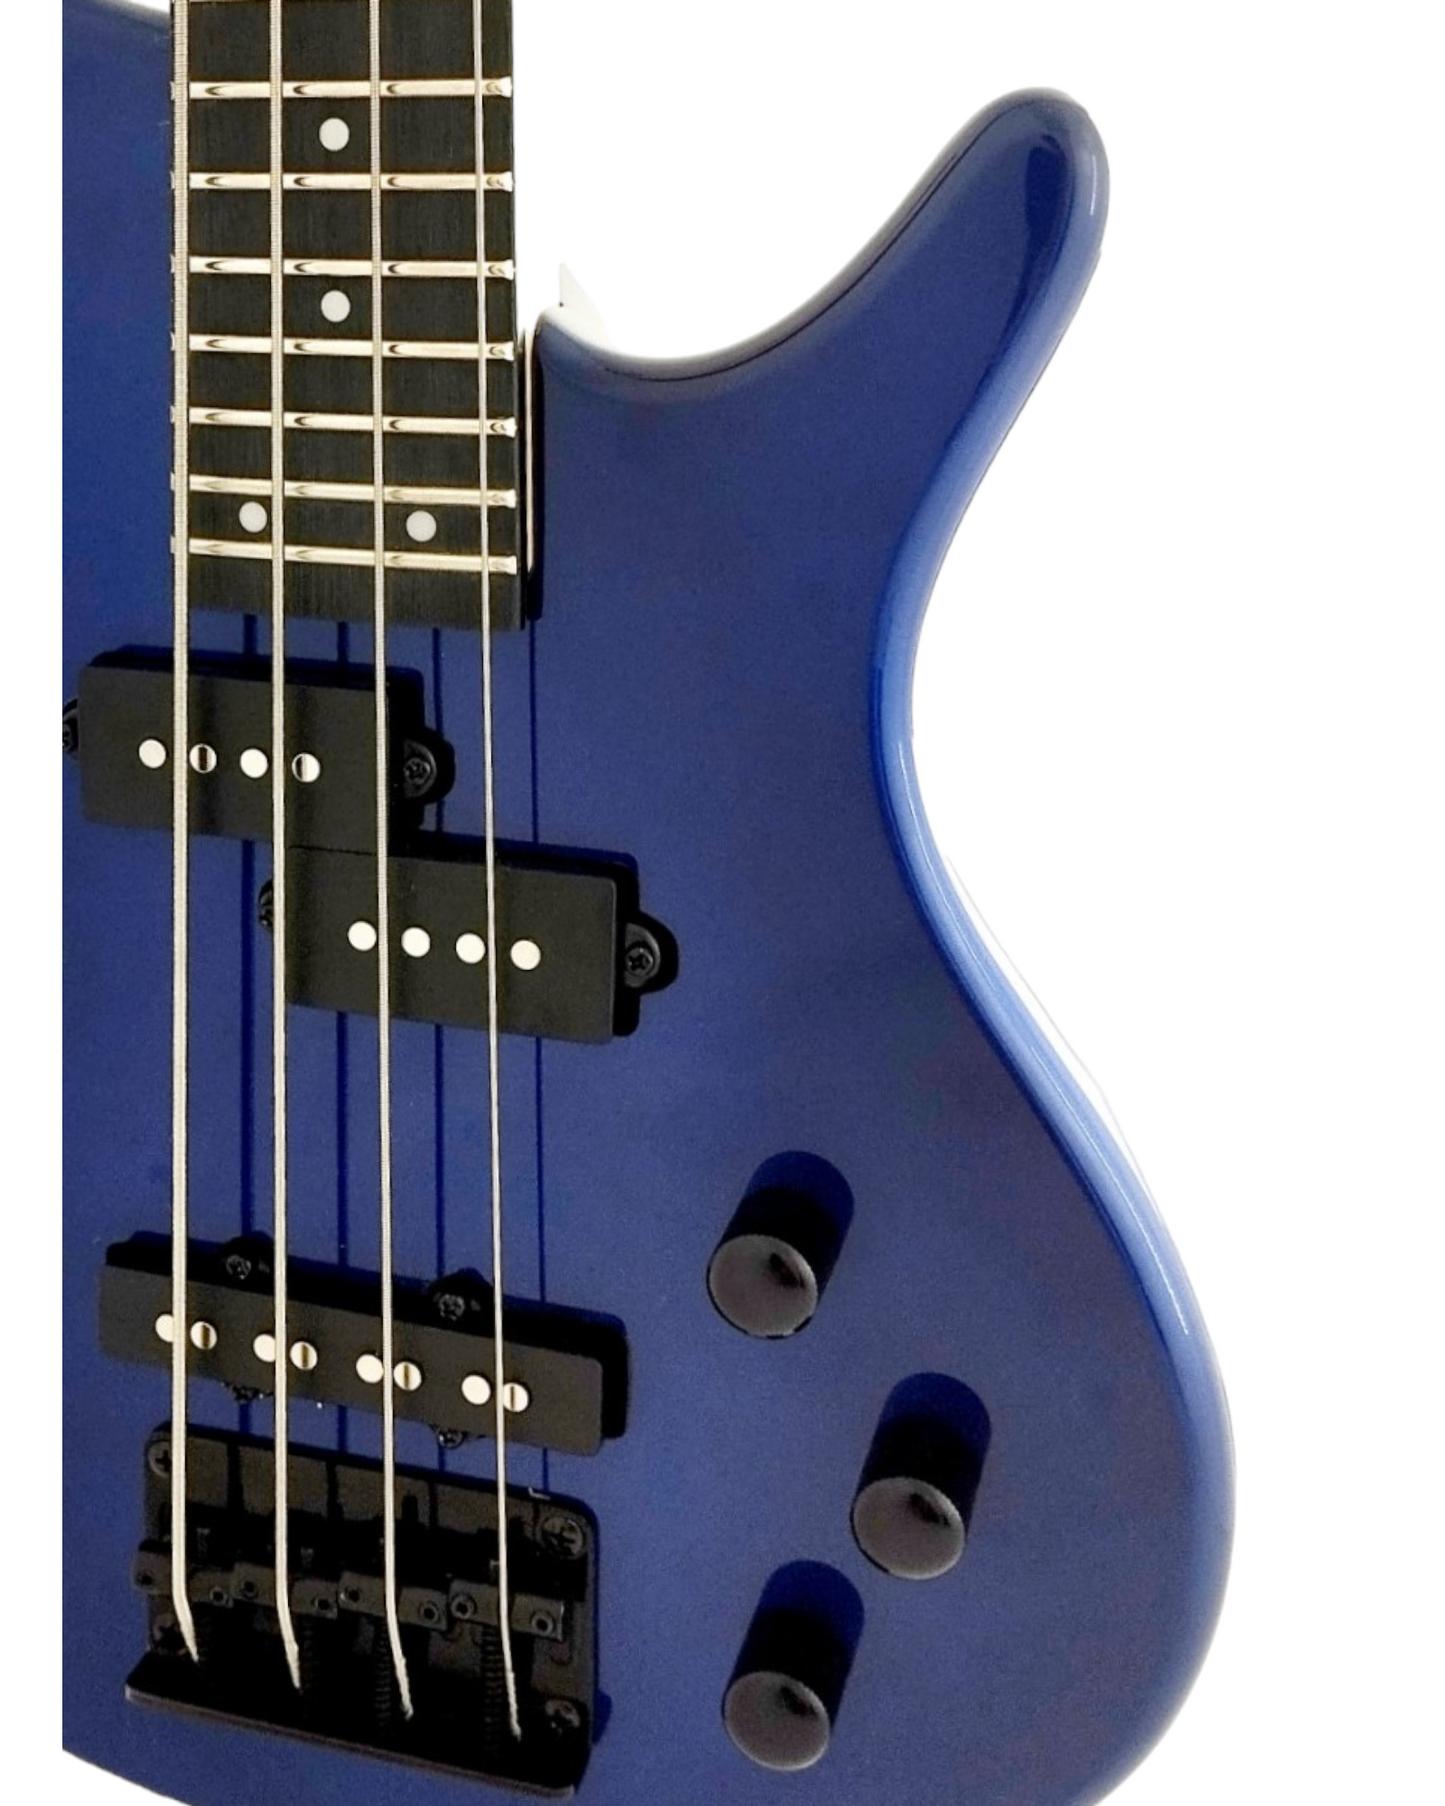 Haze 3/4 Shortscale Split-Coil Humbucker Electric Bass Guitar - Navy SBG385JB34